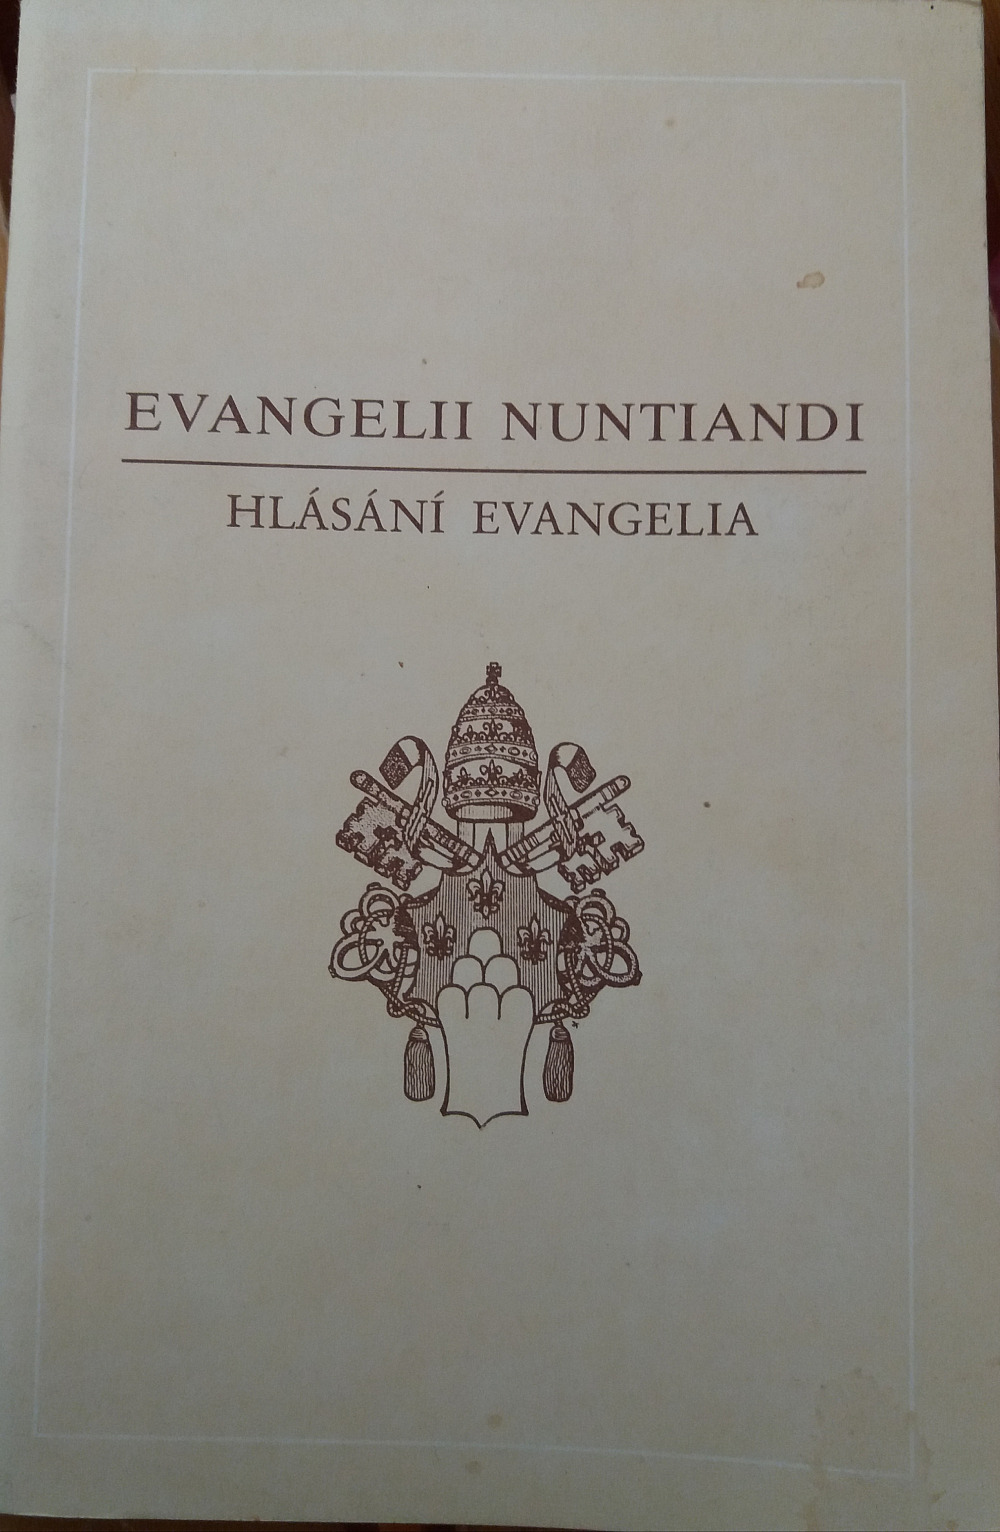 Evangelii nuntiandi - hlásání evangelia